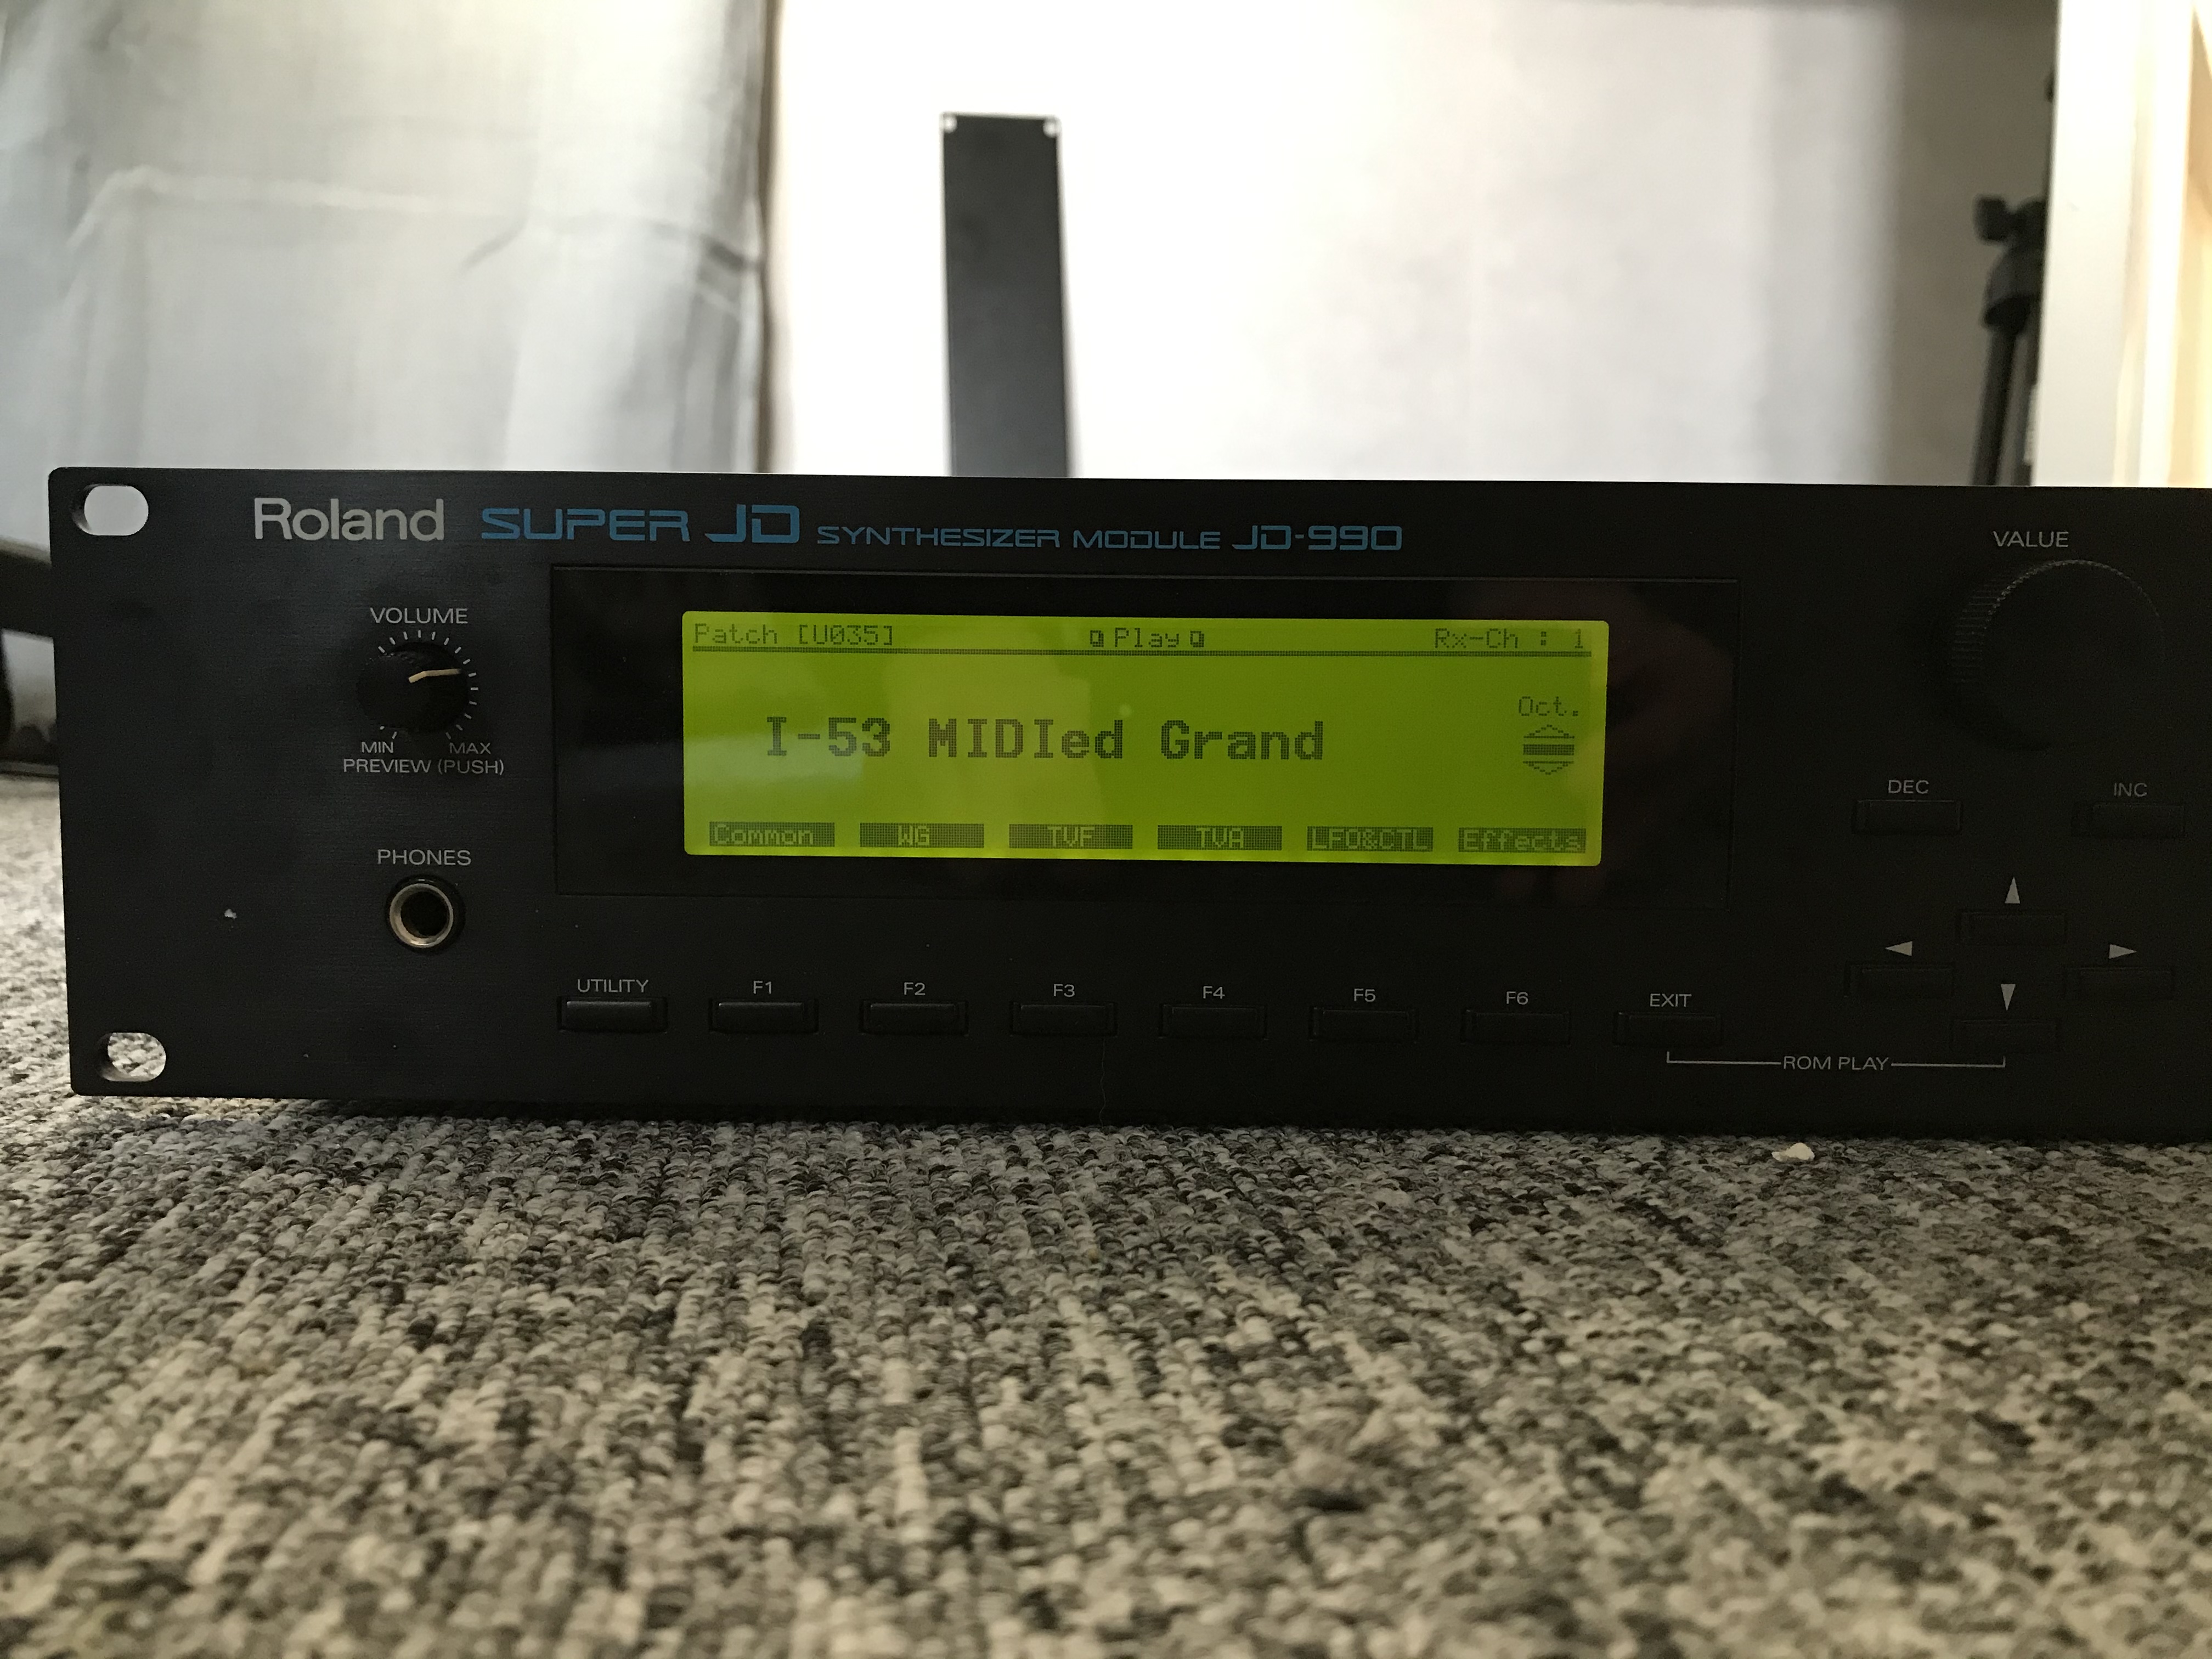 Jd 990 Superjd Roland Jd 990 Superjd Audiofanzine